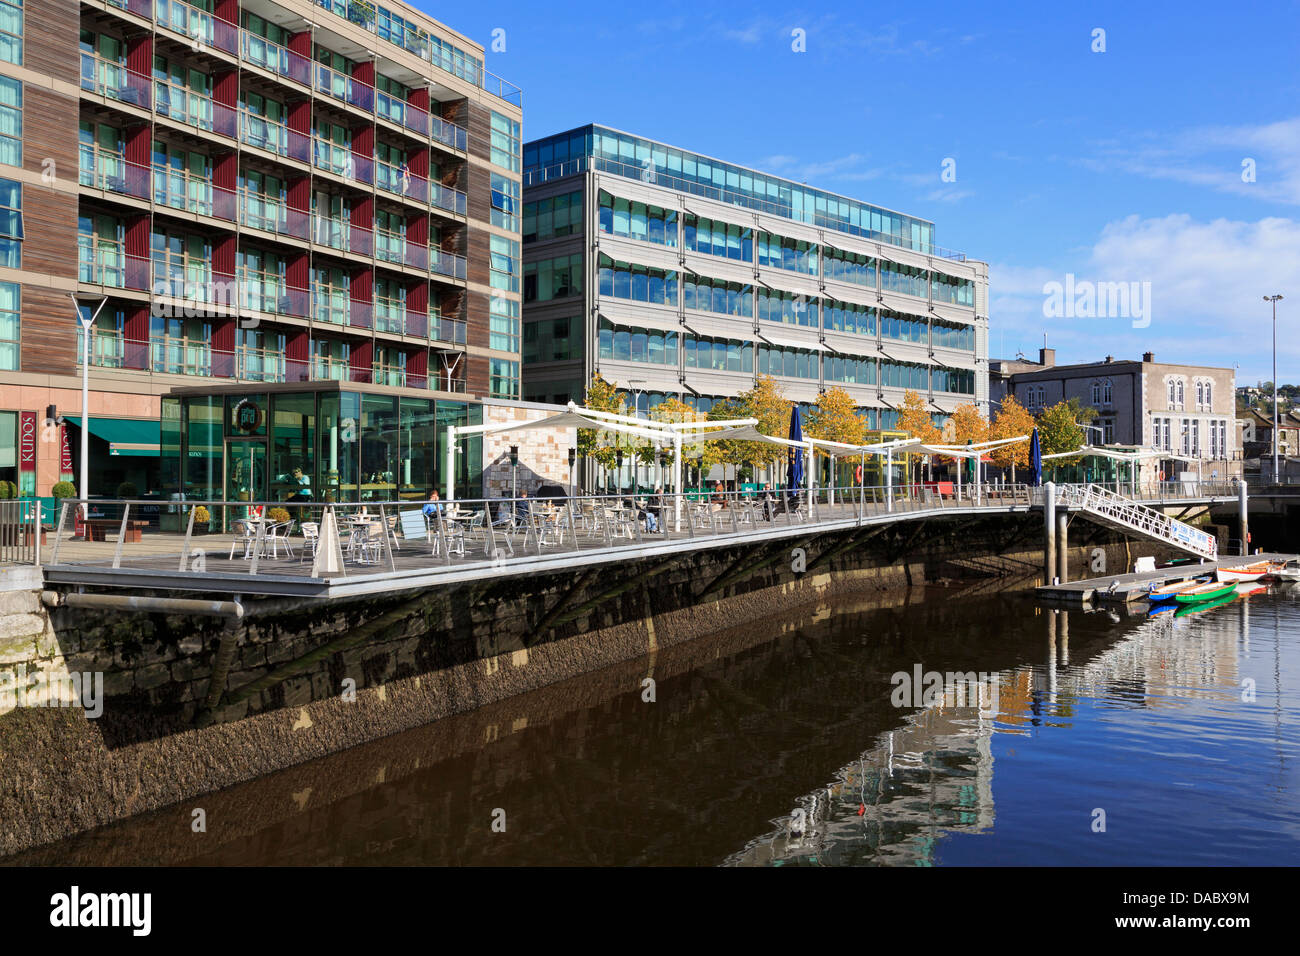 Clarion Hotel on Lapp's Quay, Cork City, County Cork, Munster, Republic of Ireland, Europe Stock Photo